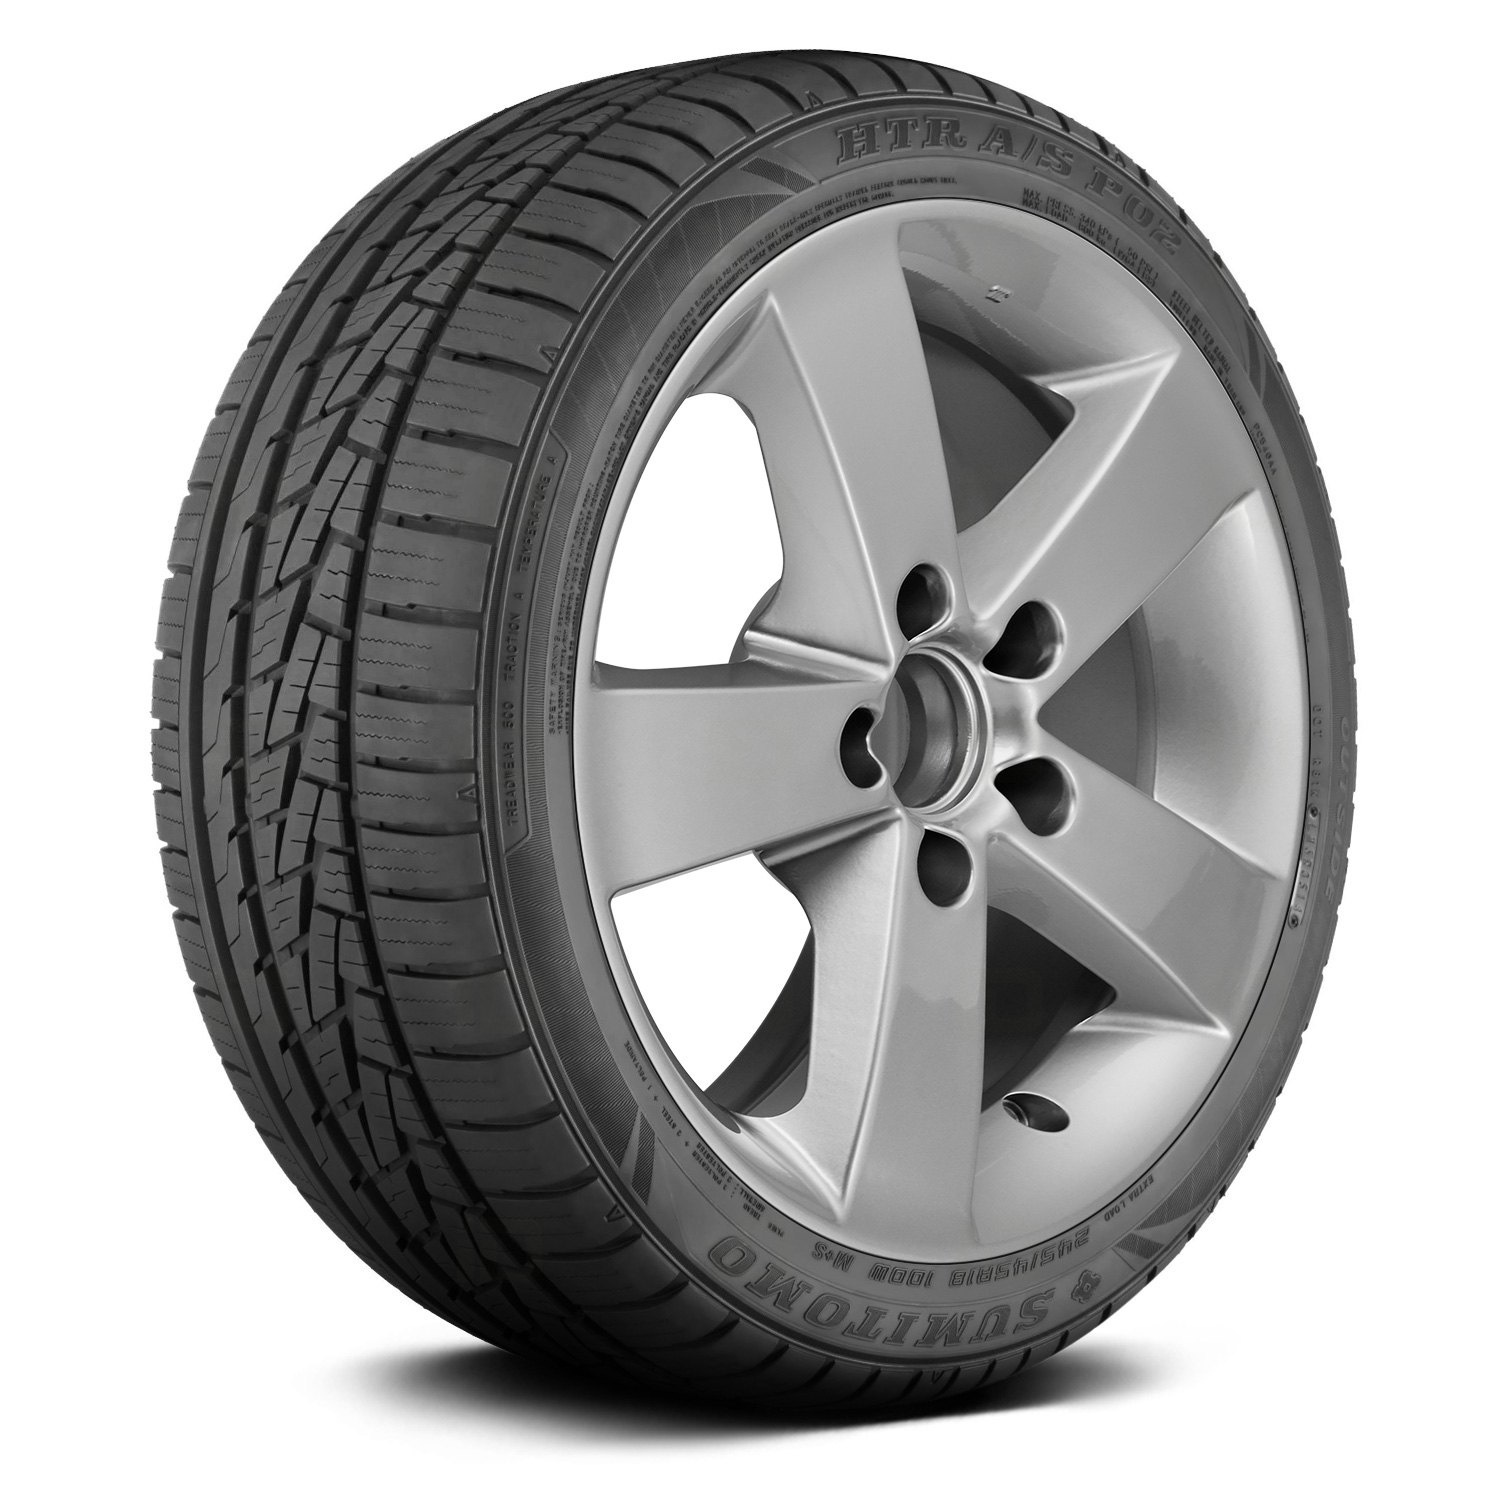 235/45-18 94W SUMITOMO HTR A/S P02 All-Season Radial Tire 